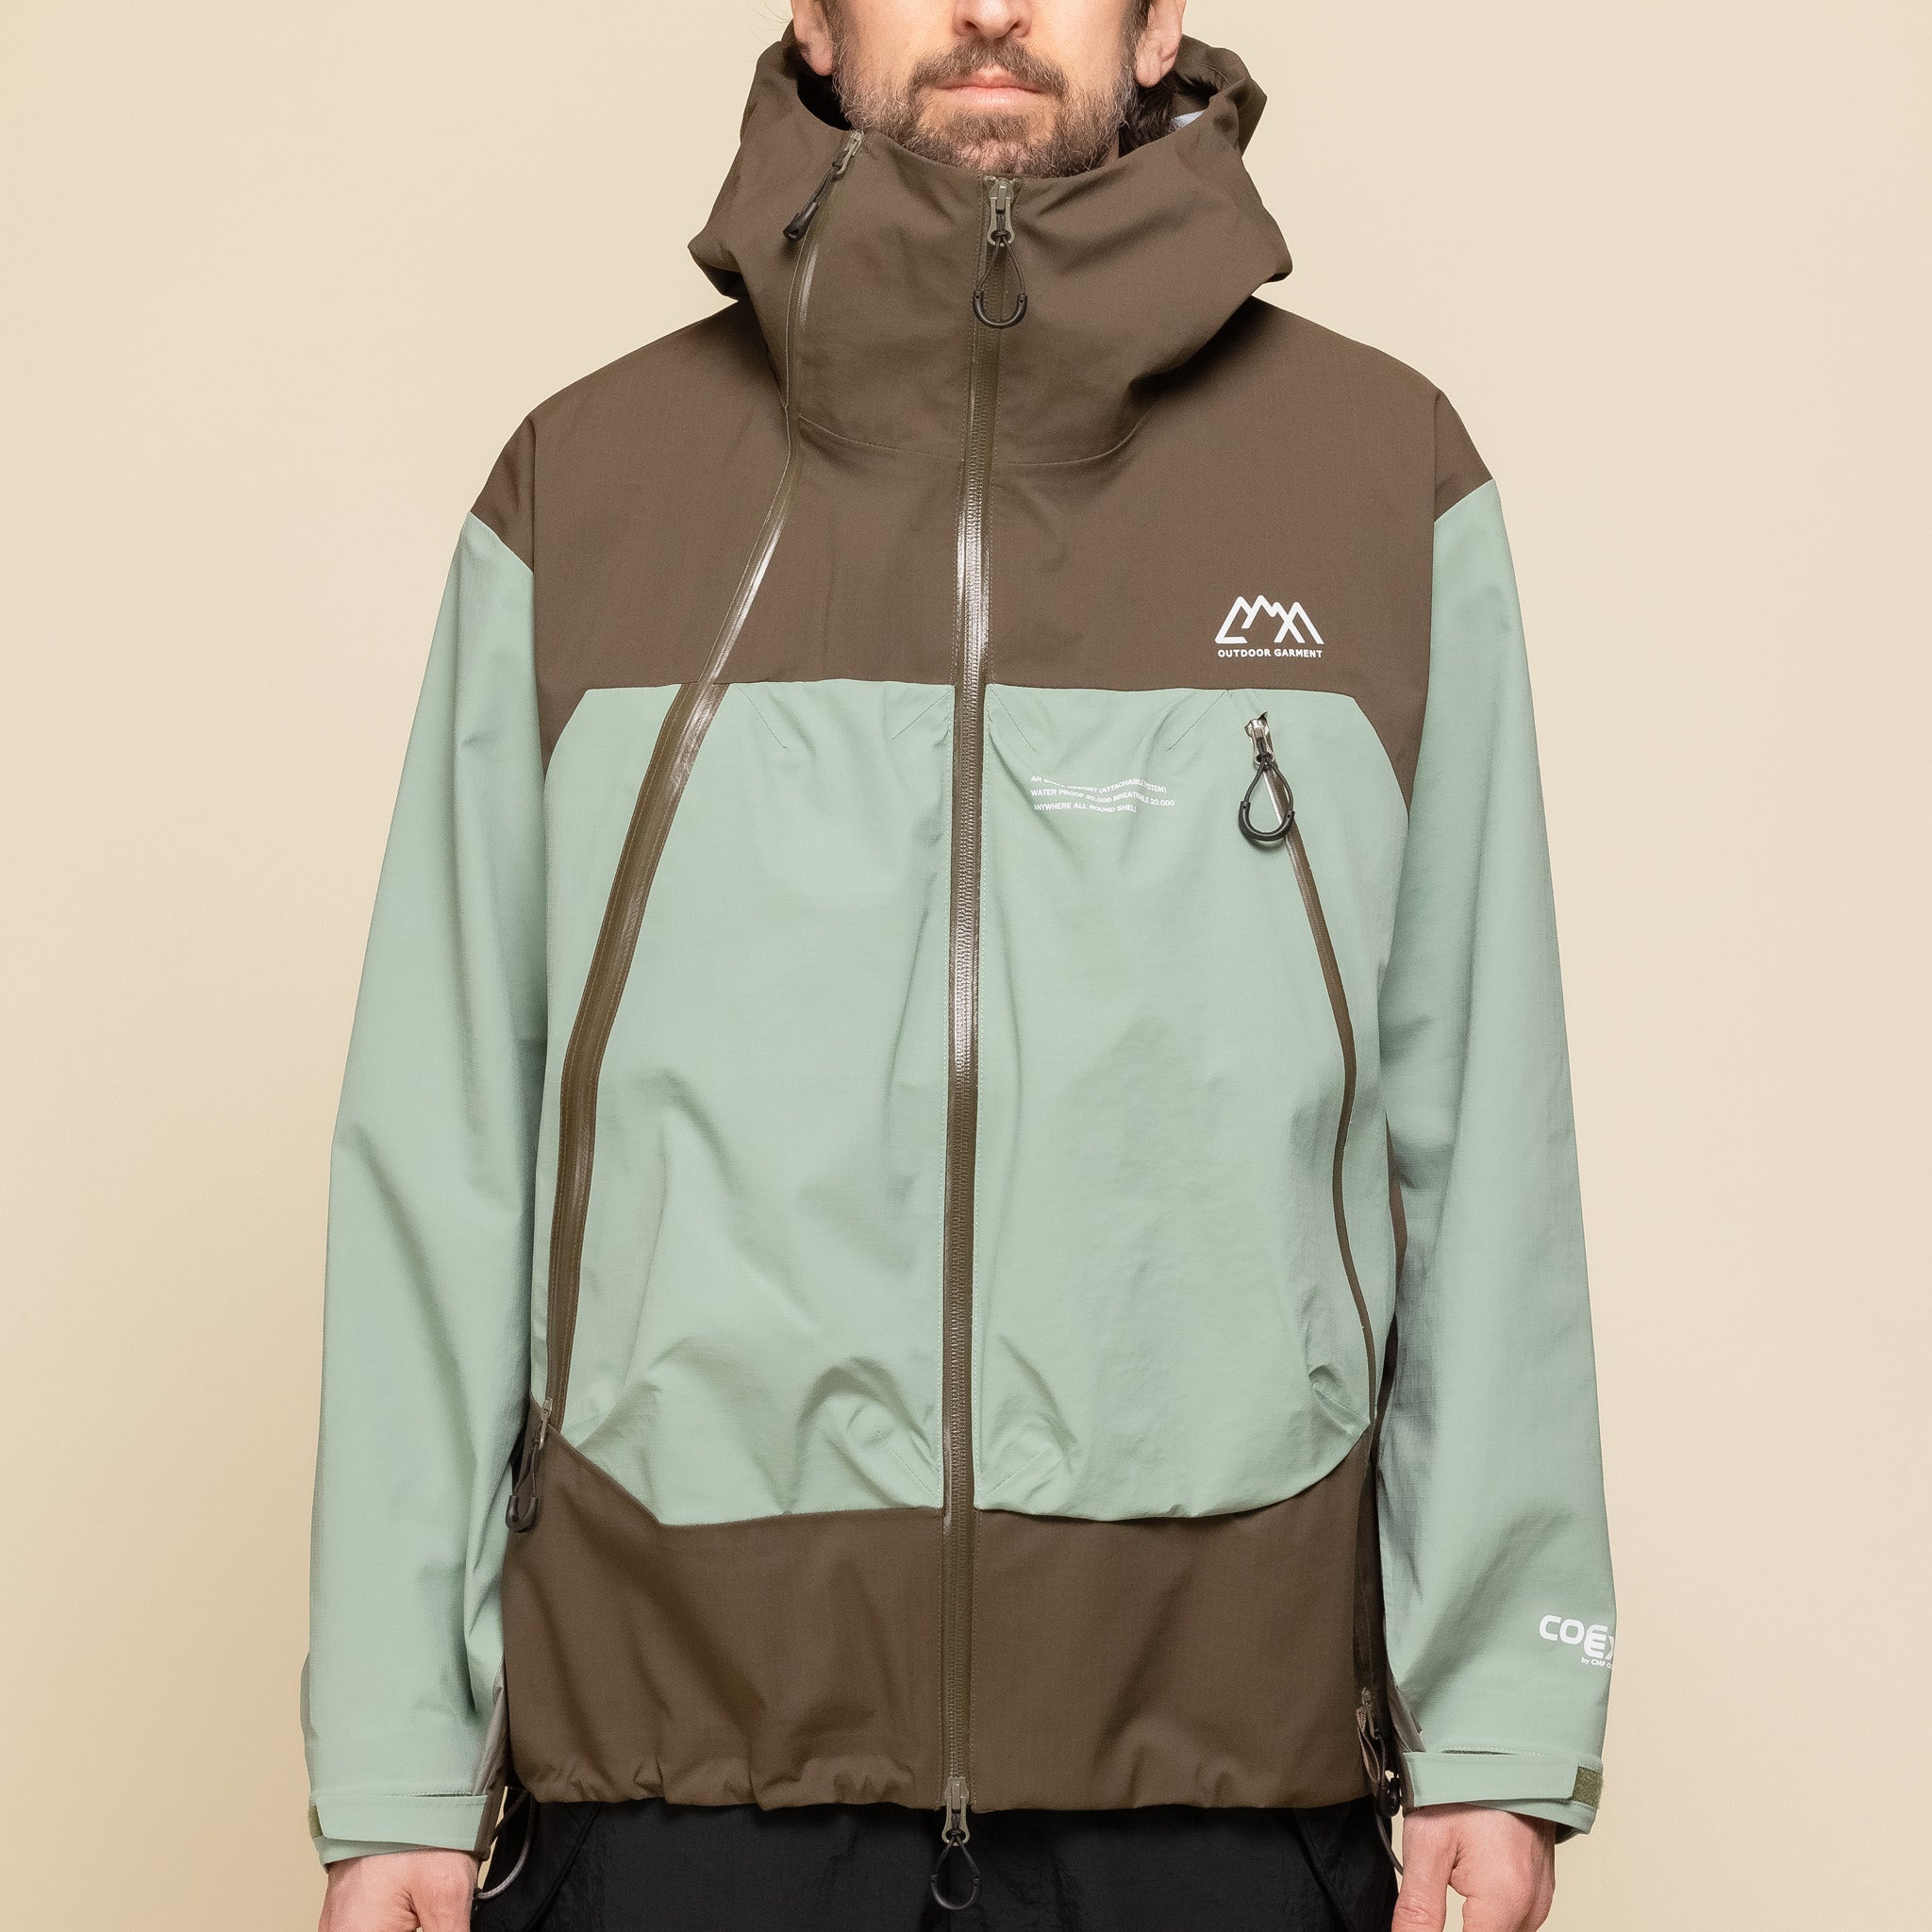 CMF Comfy Outdoor Garment - AR Shell Coexist Jacket - Khaki